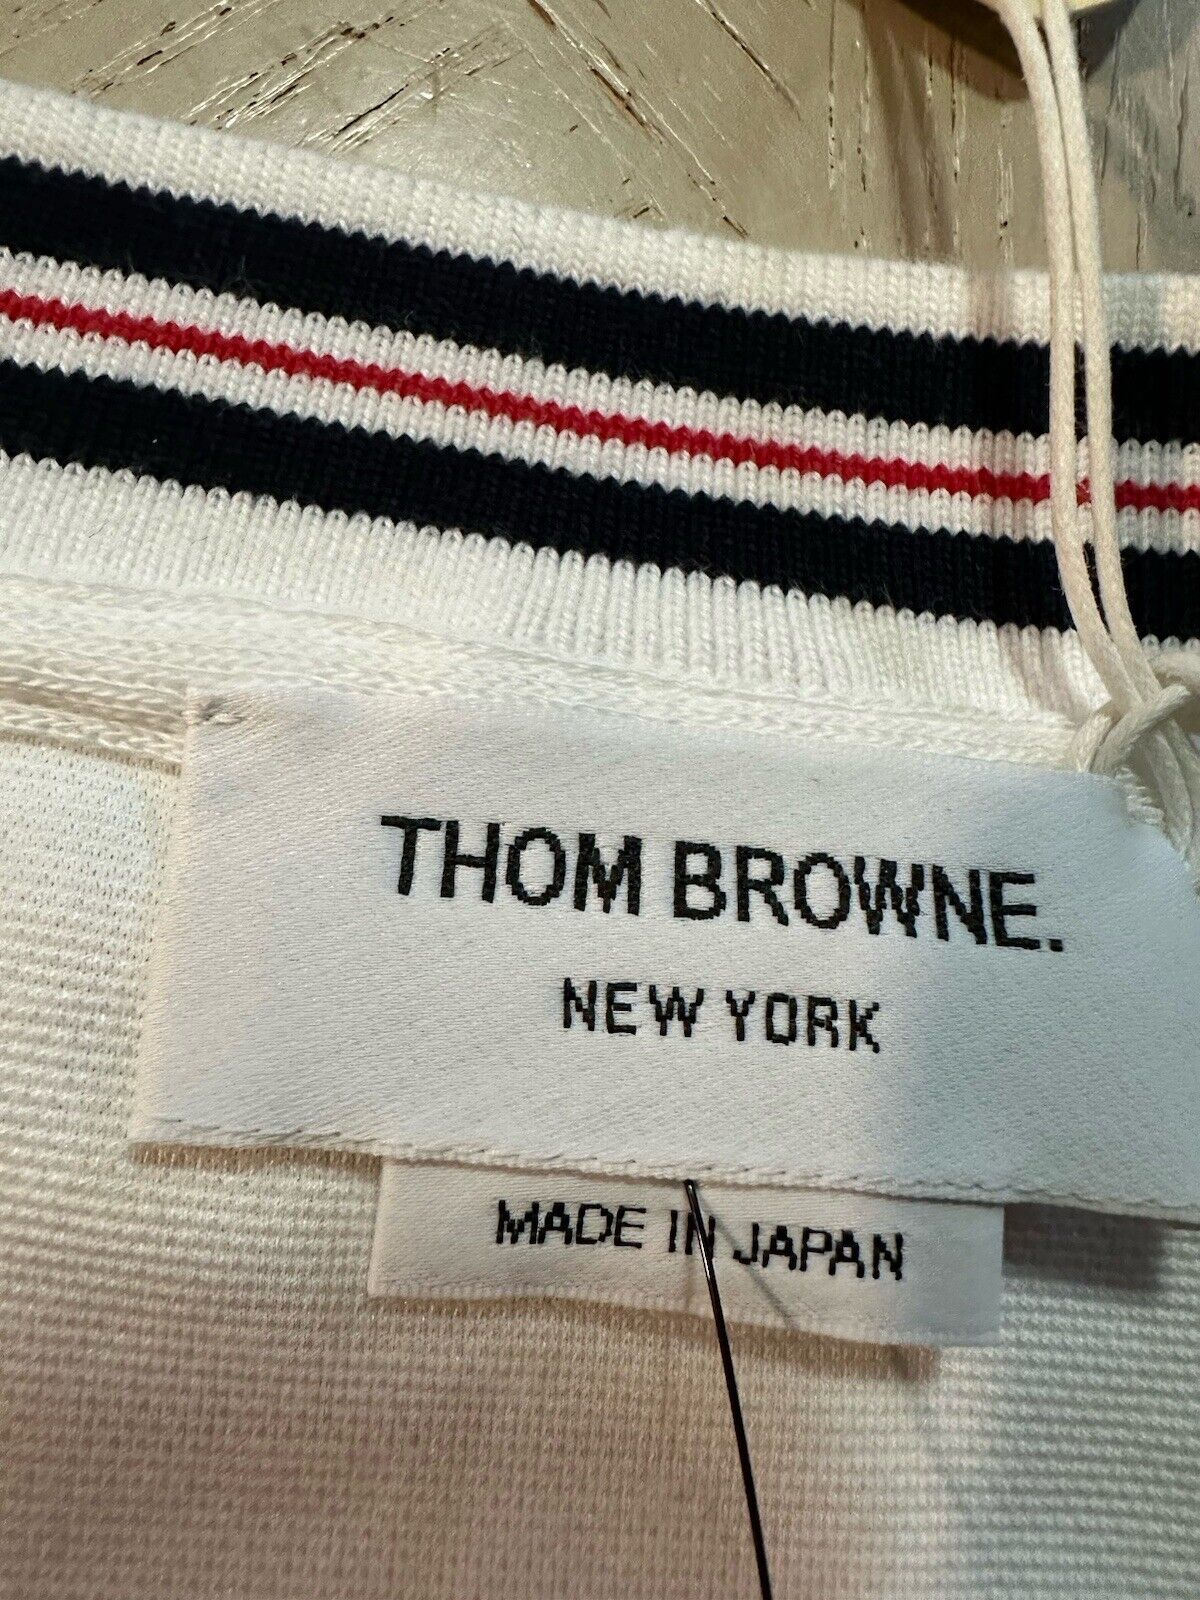 New $750 Thom Browne V Neck Stripe Sweater Vest White Size 44/8 Japan